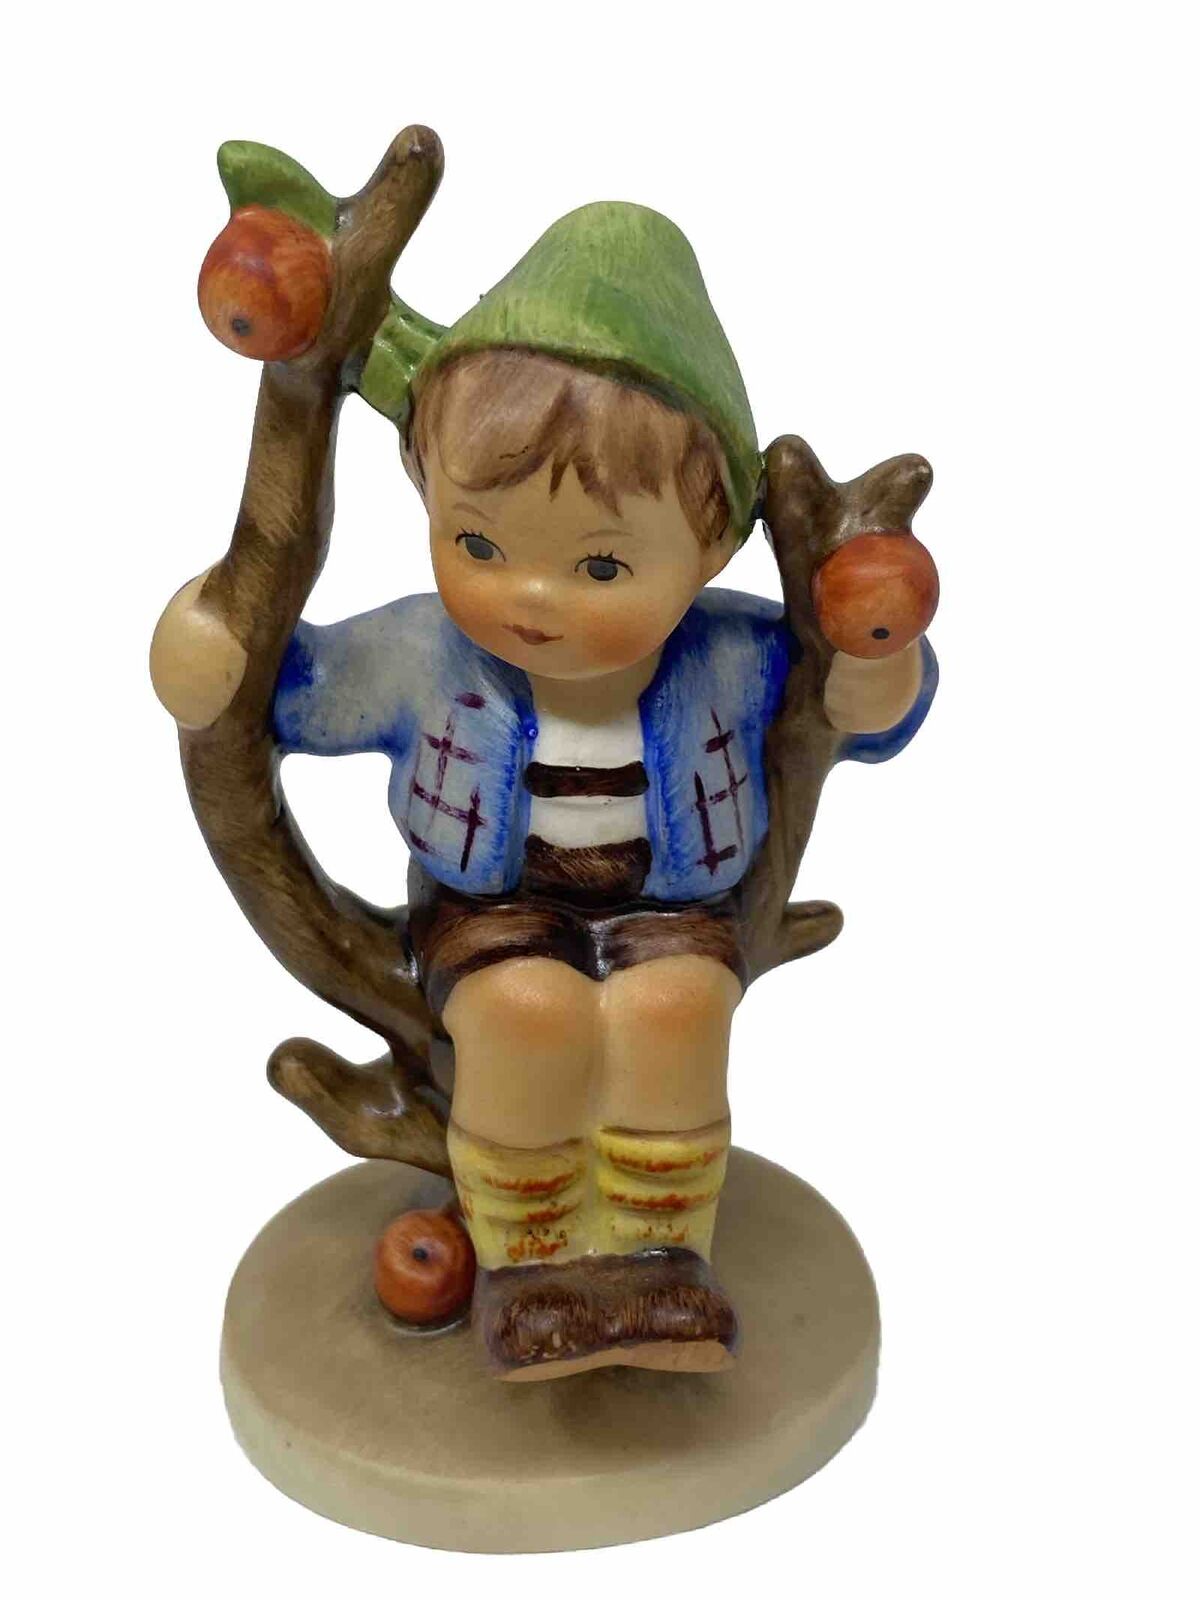 Hummel Goebel Figurine # 142 Apple Tree Boy 3-3/4” TMK 5 West Germany Signed